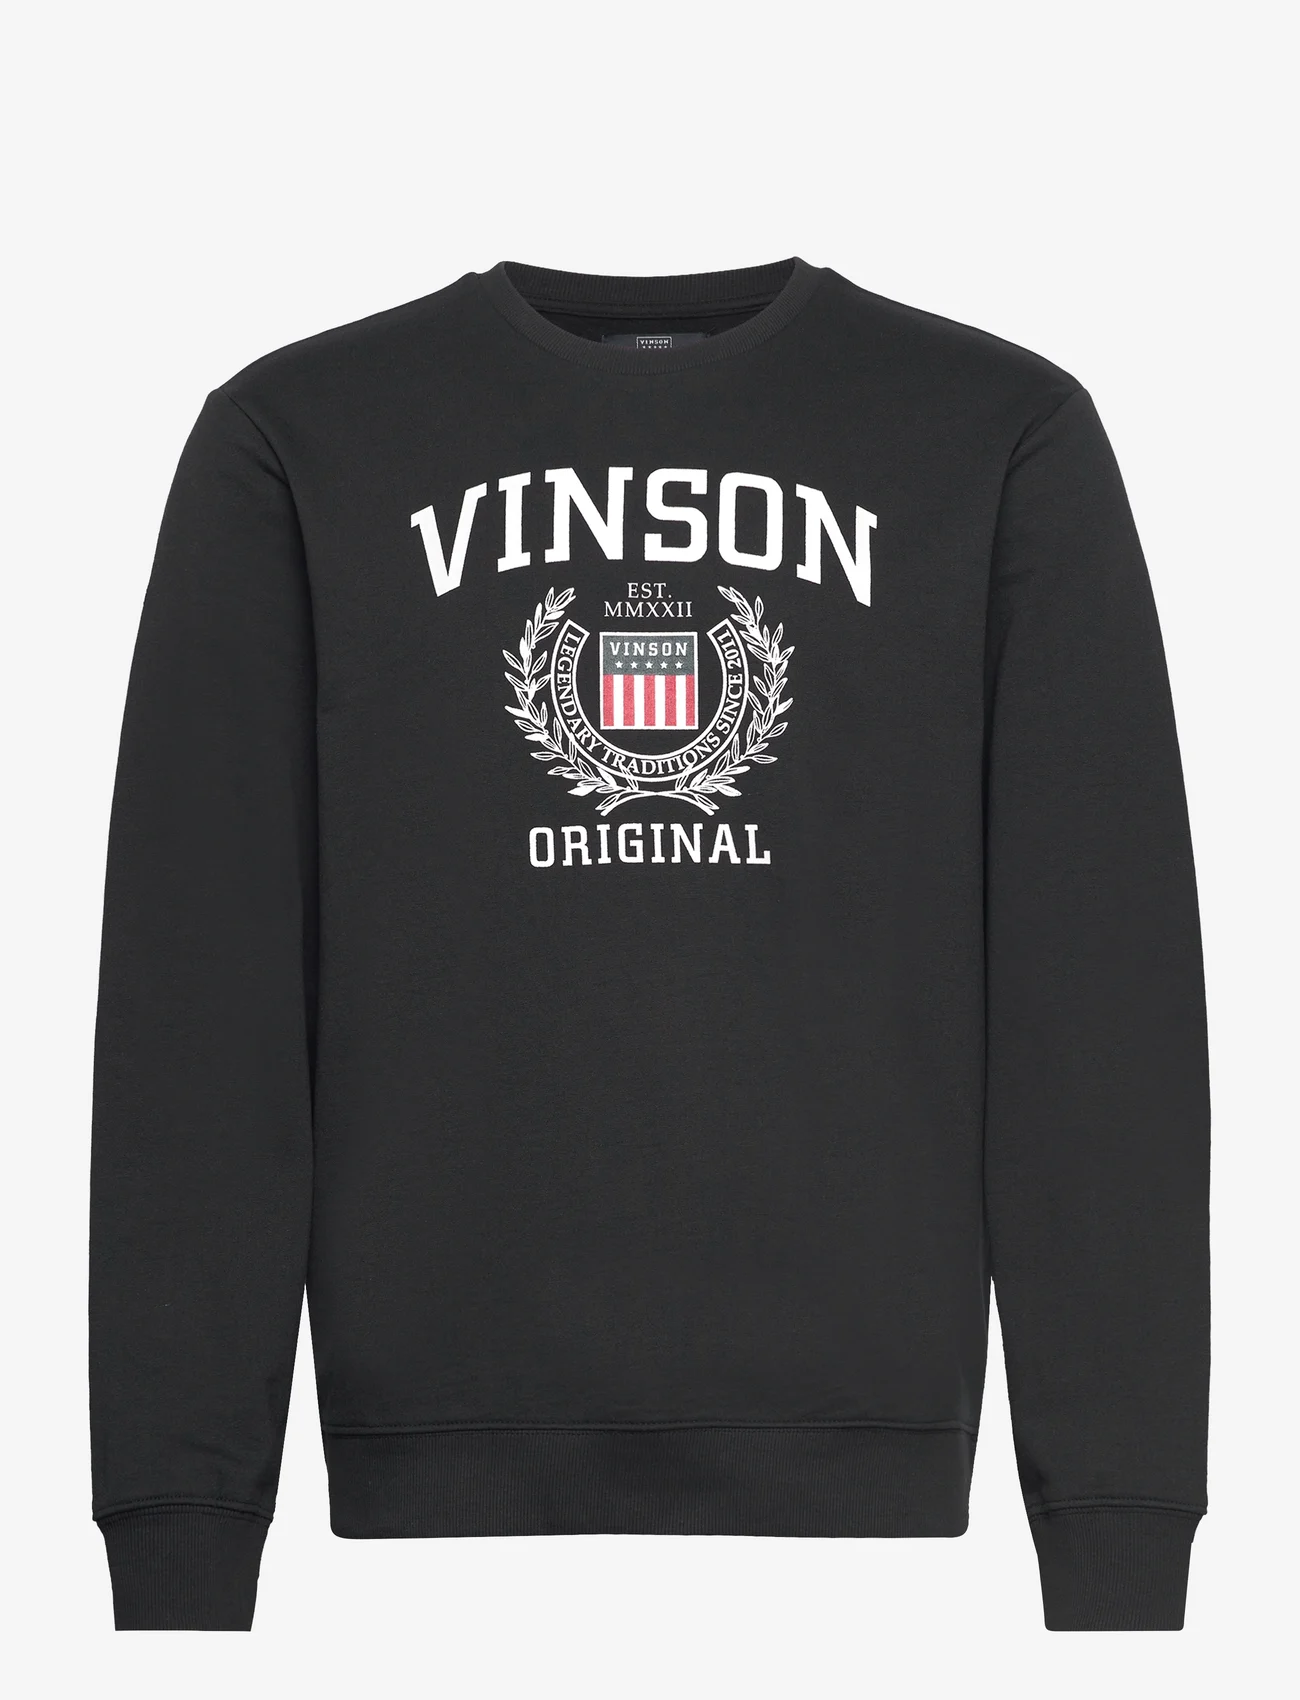 VINSON - Kristian Mens Crew Neck - sweatshirts - tap shoe - 0